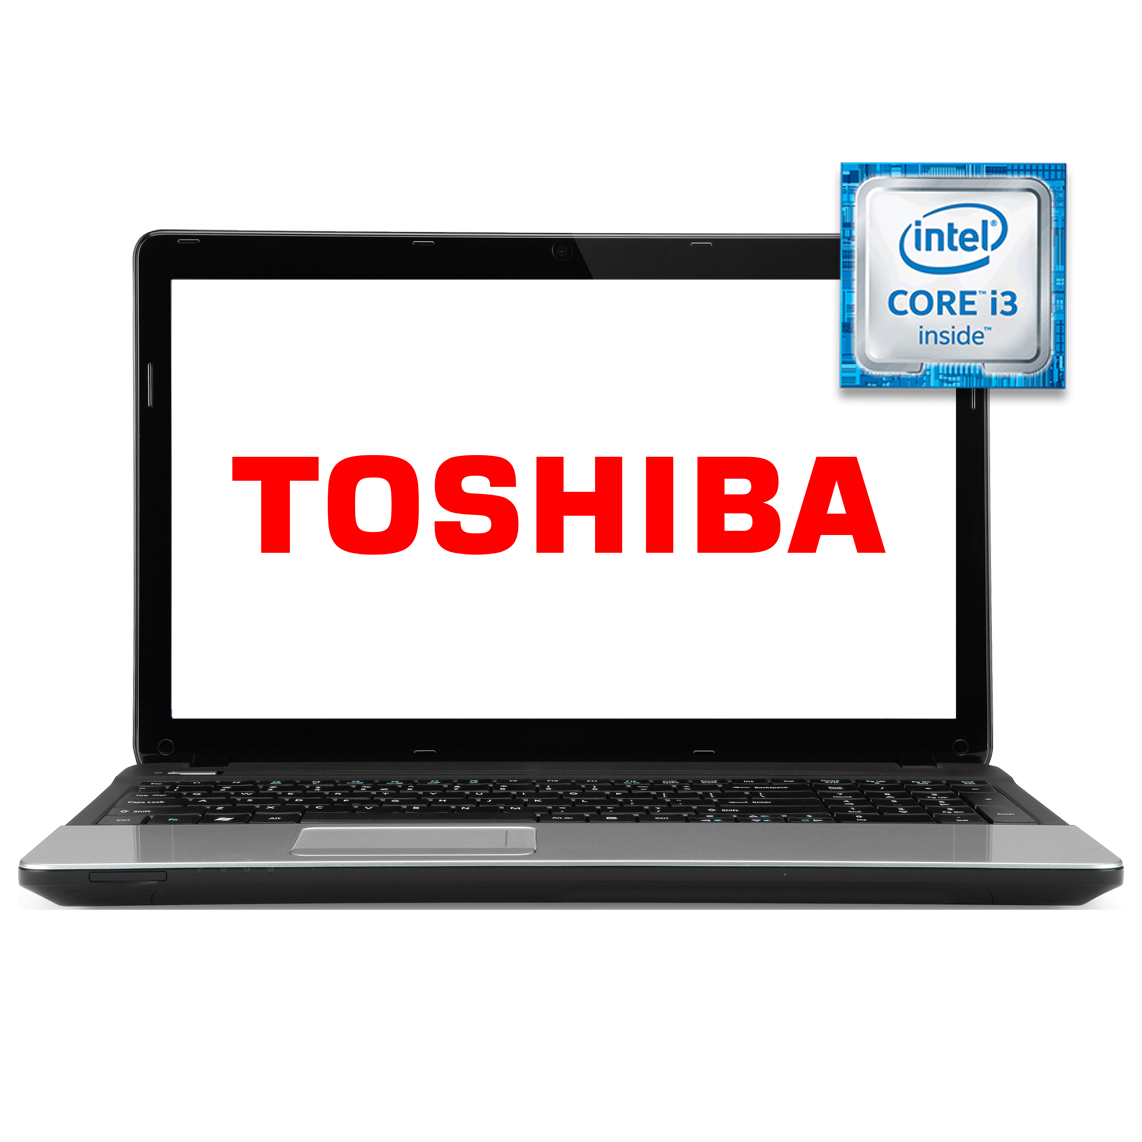 Toshiba - 13 inch Core i3 3rd Gen